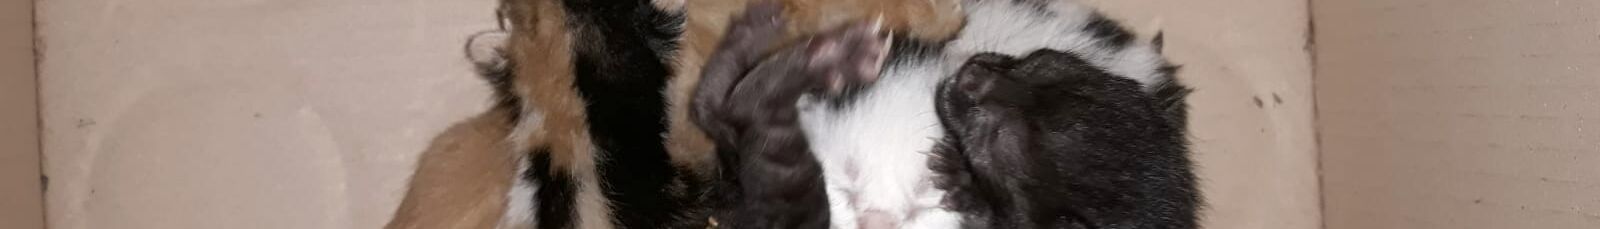 Cinco gatitos recién nacidos abandonados